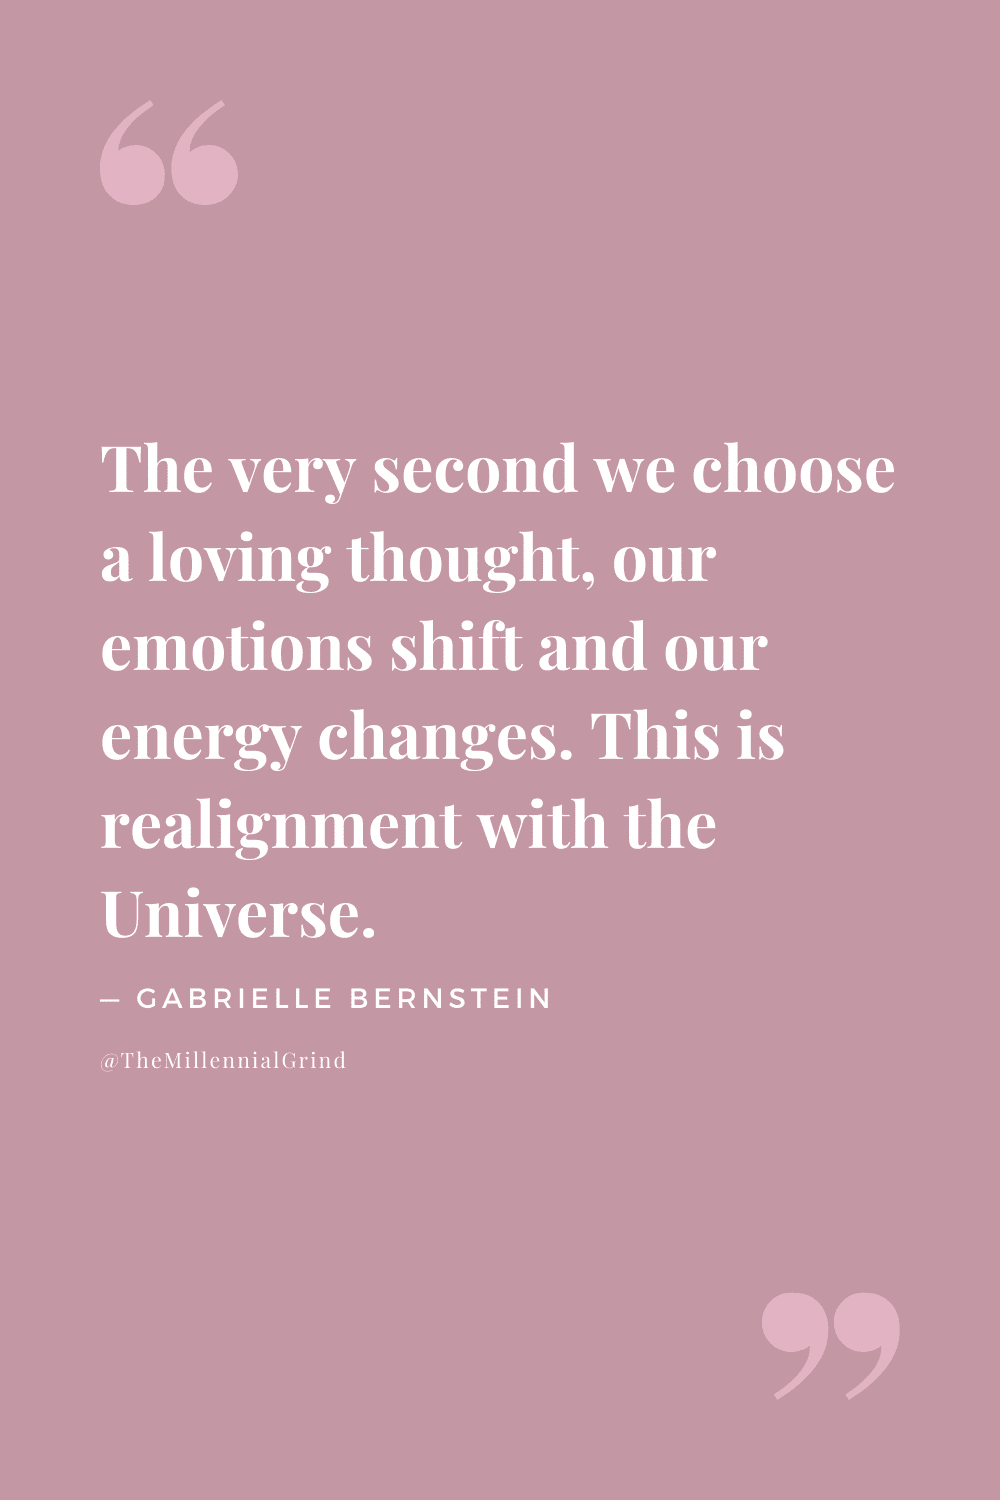 Quotes from Super Attractor by Gabrielle Bernstein